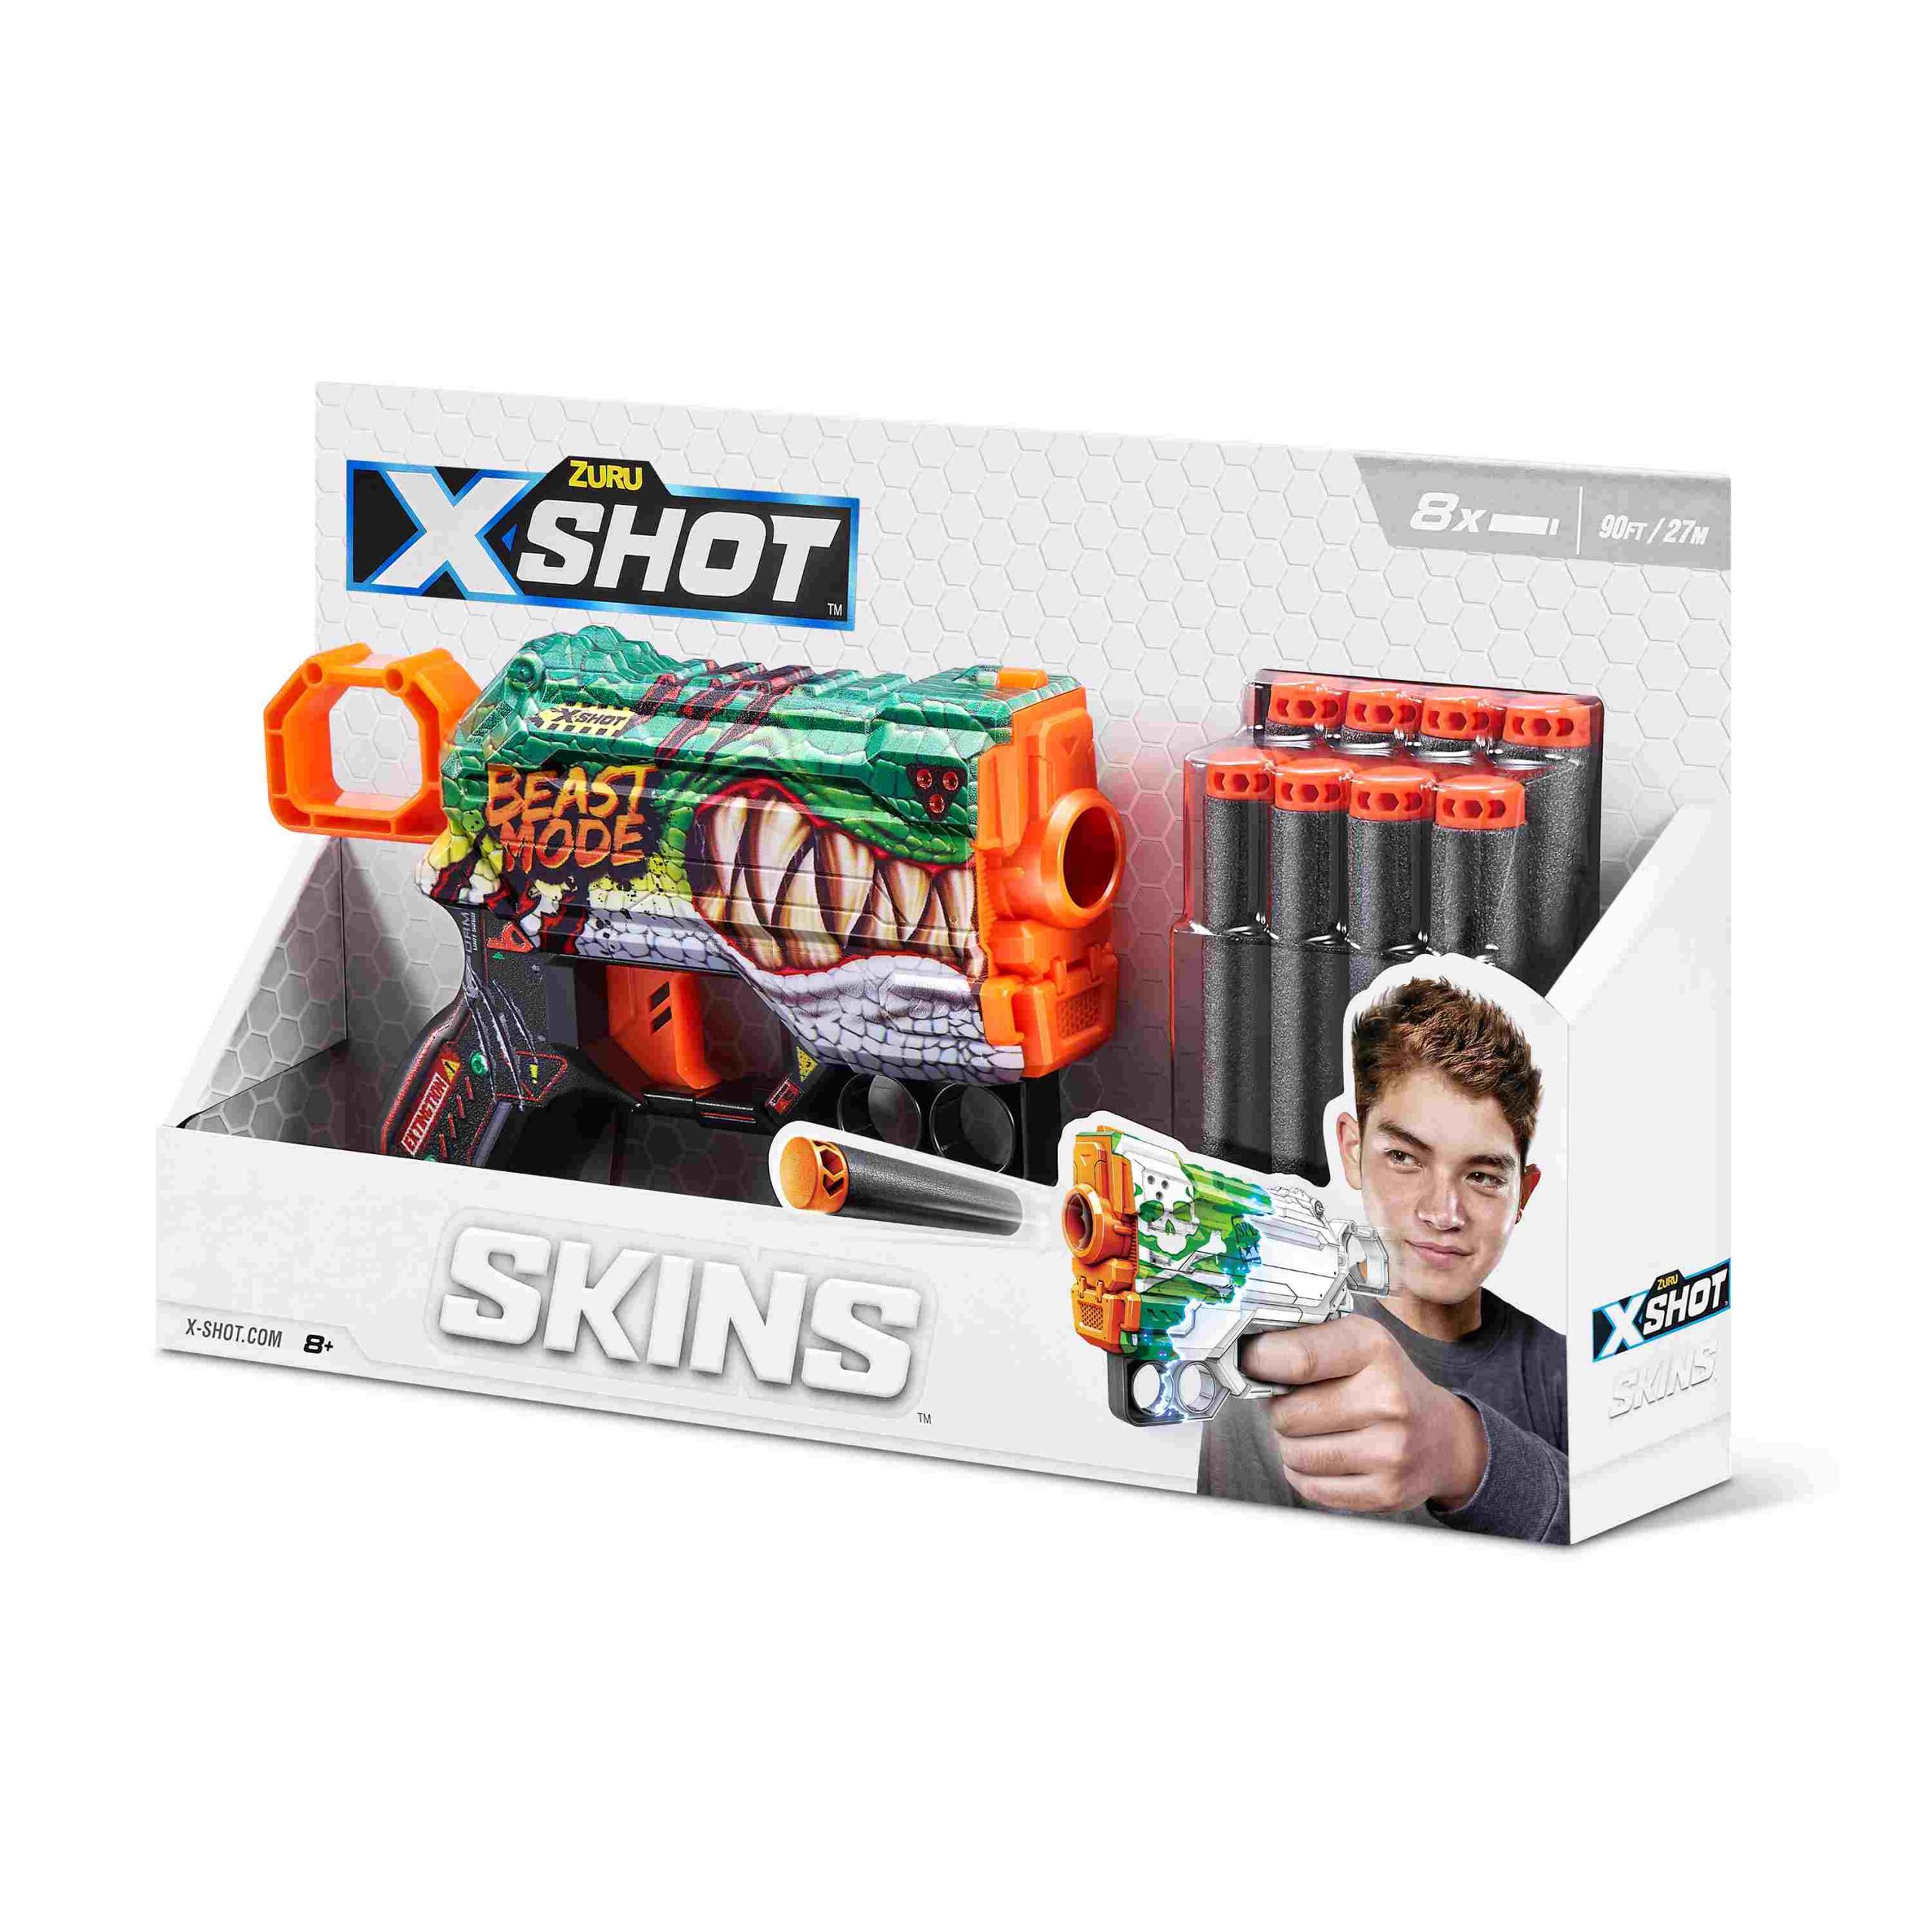 Xshot skins menace beast mode - SUN&SPORT ORIG, X-SHOT